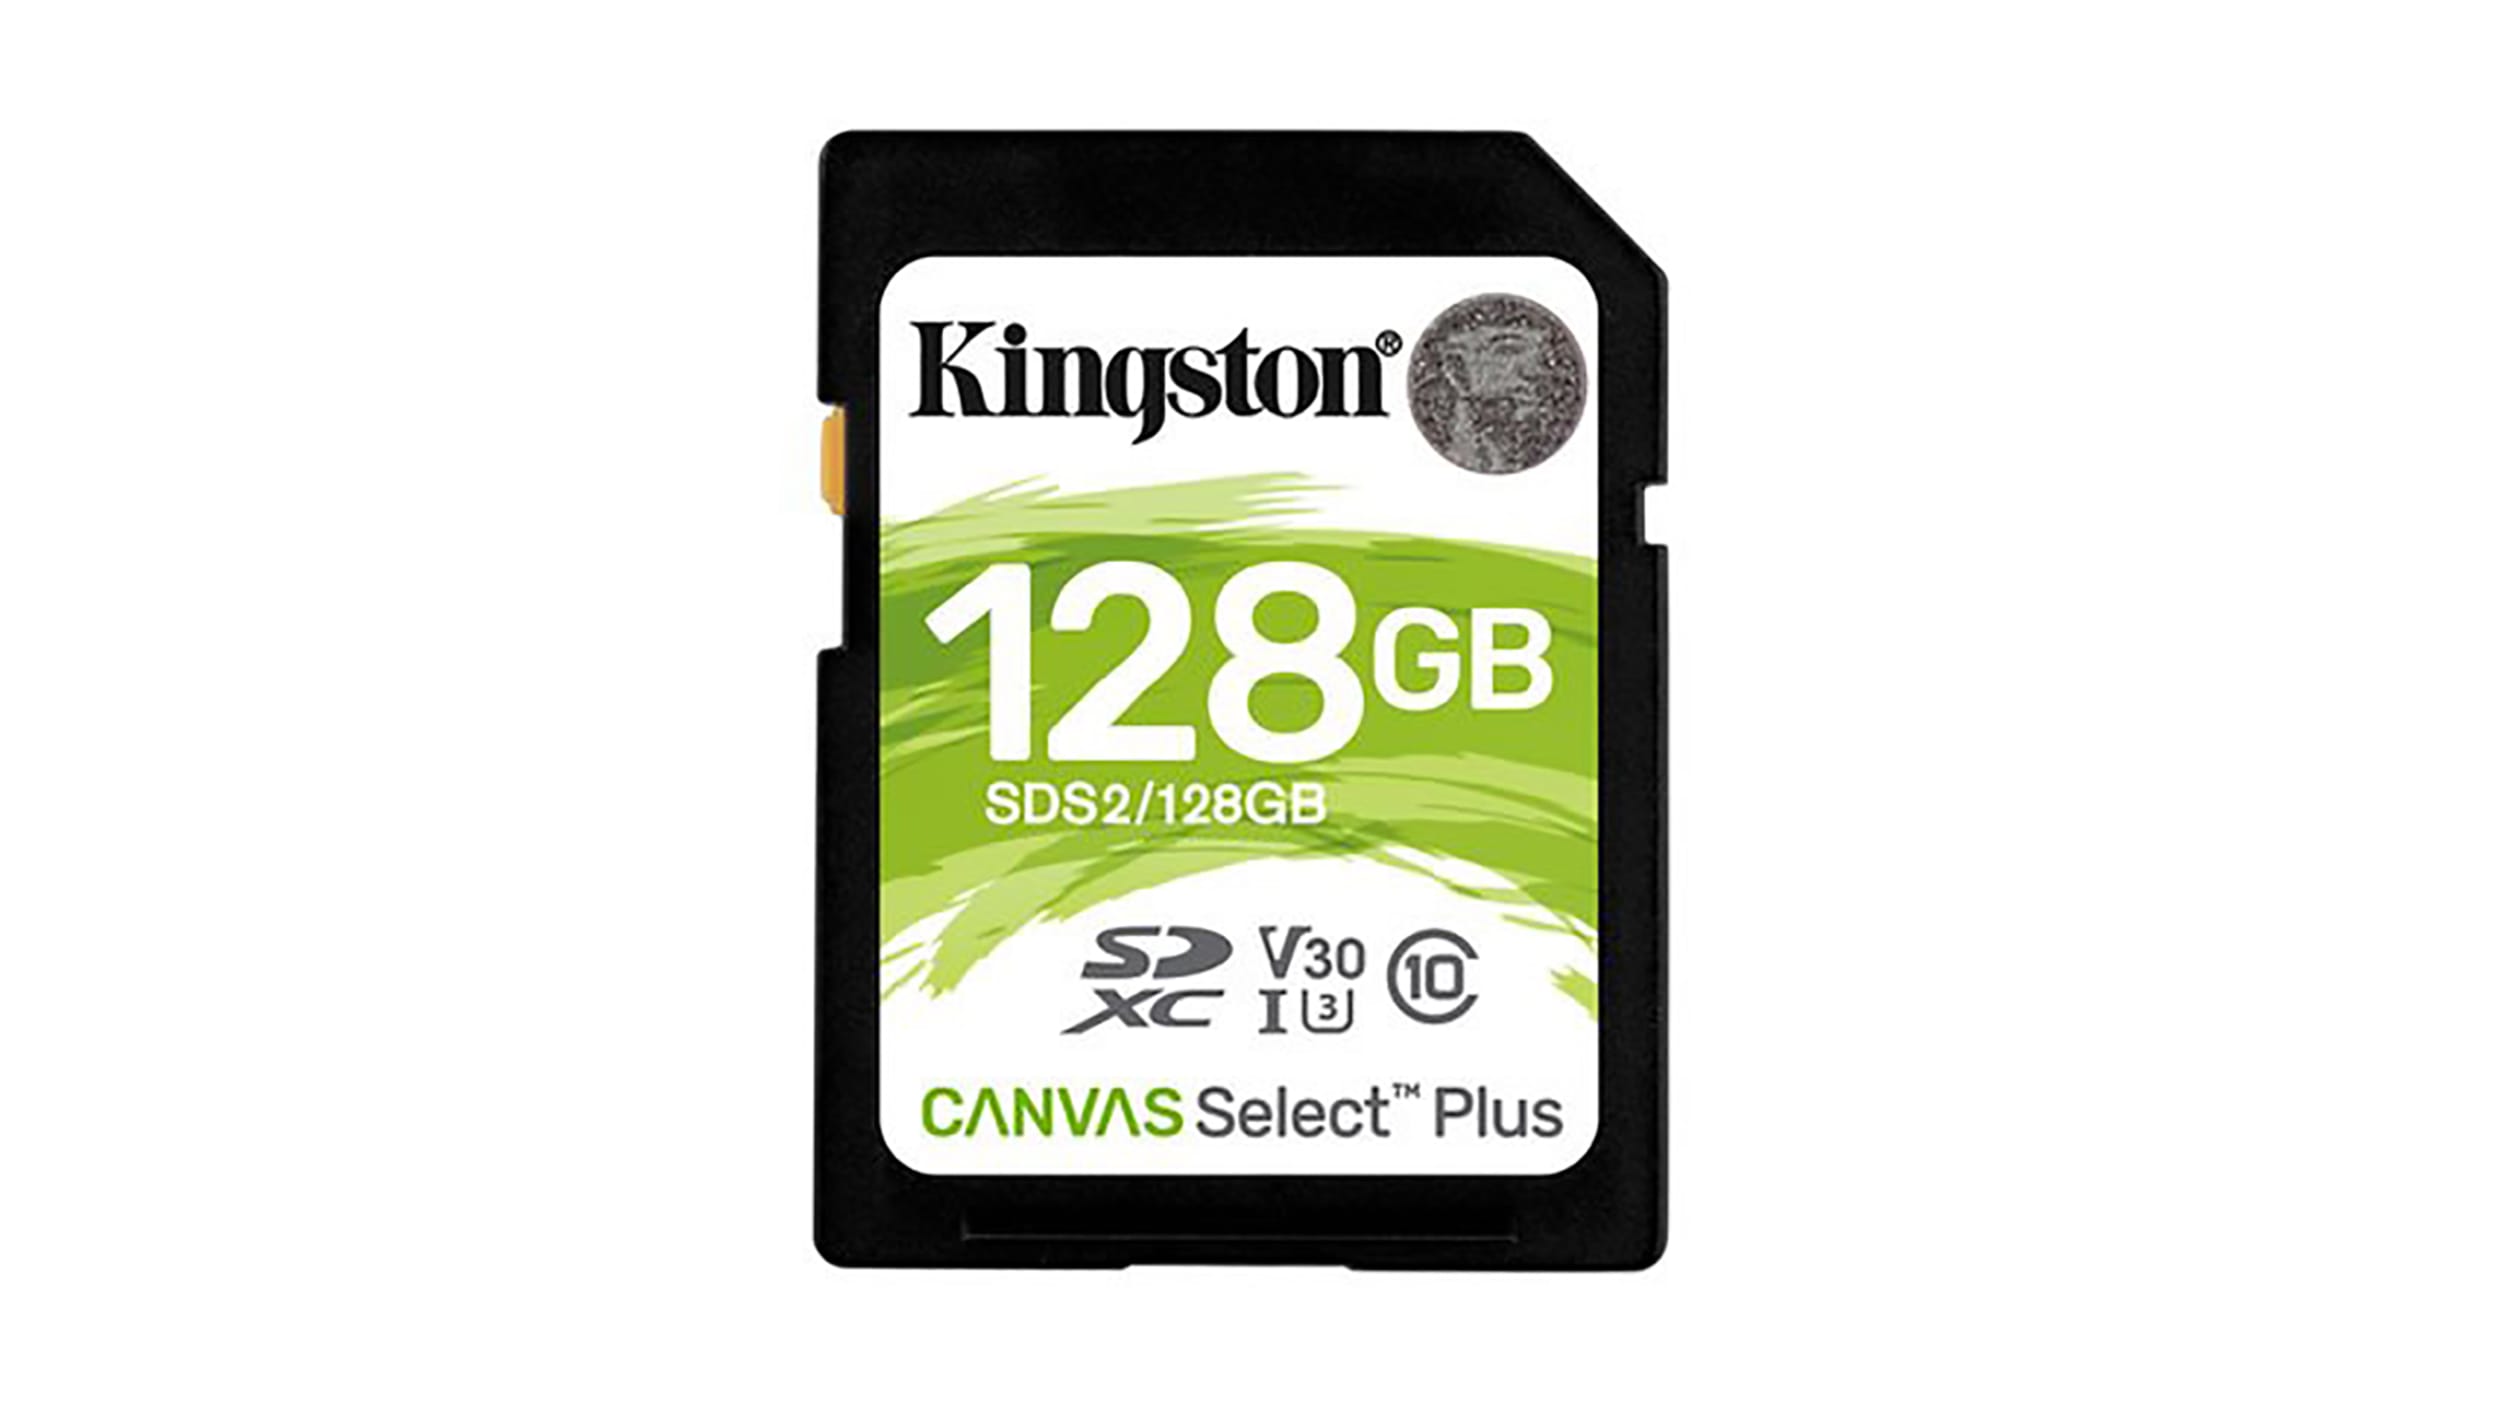 SDS2/128GB | Kingston 128 GB SDXC SD Card, Class 10, UHS-I | RS